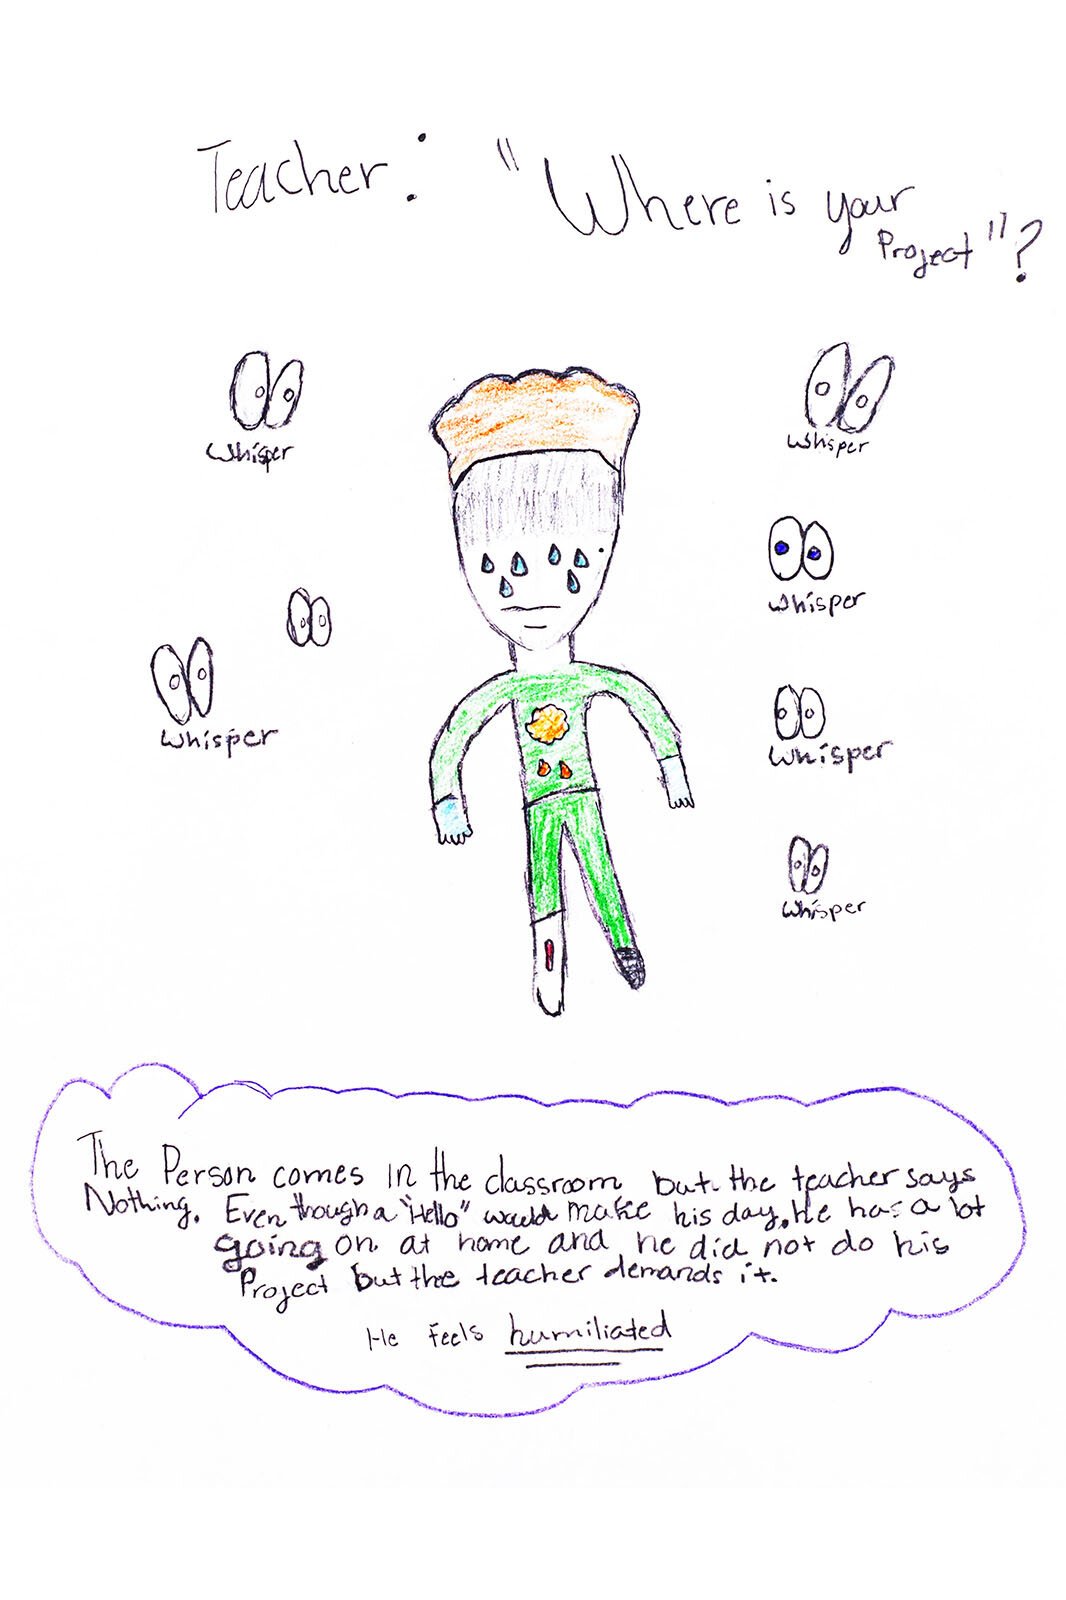 Mental Health Comic, #3, created by Daniel Kibezi, 7th grader at Millwood Middle School.